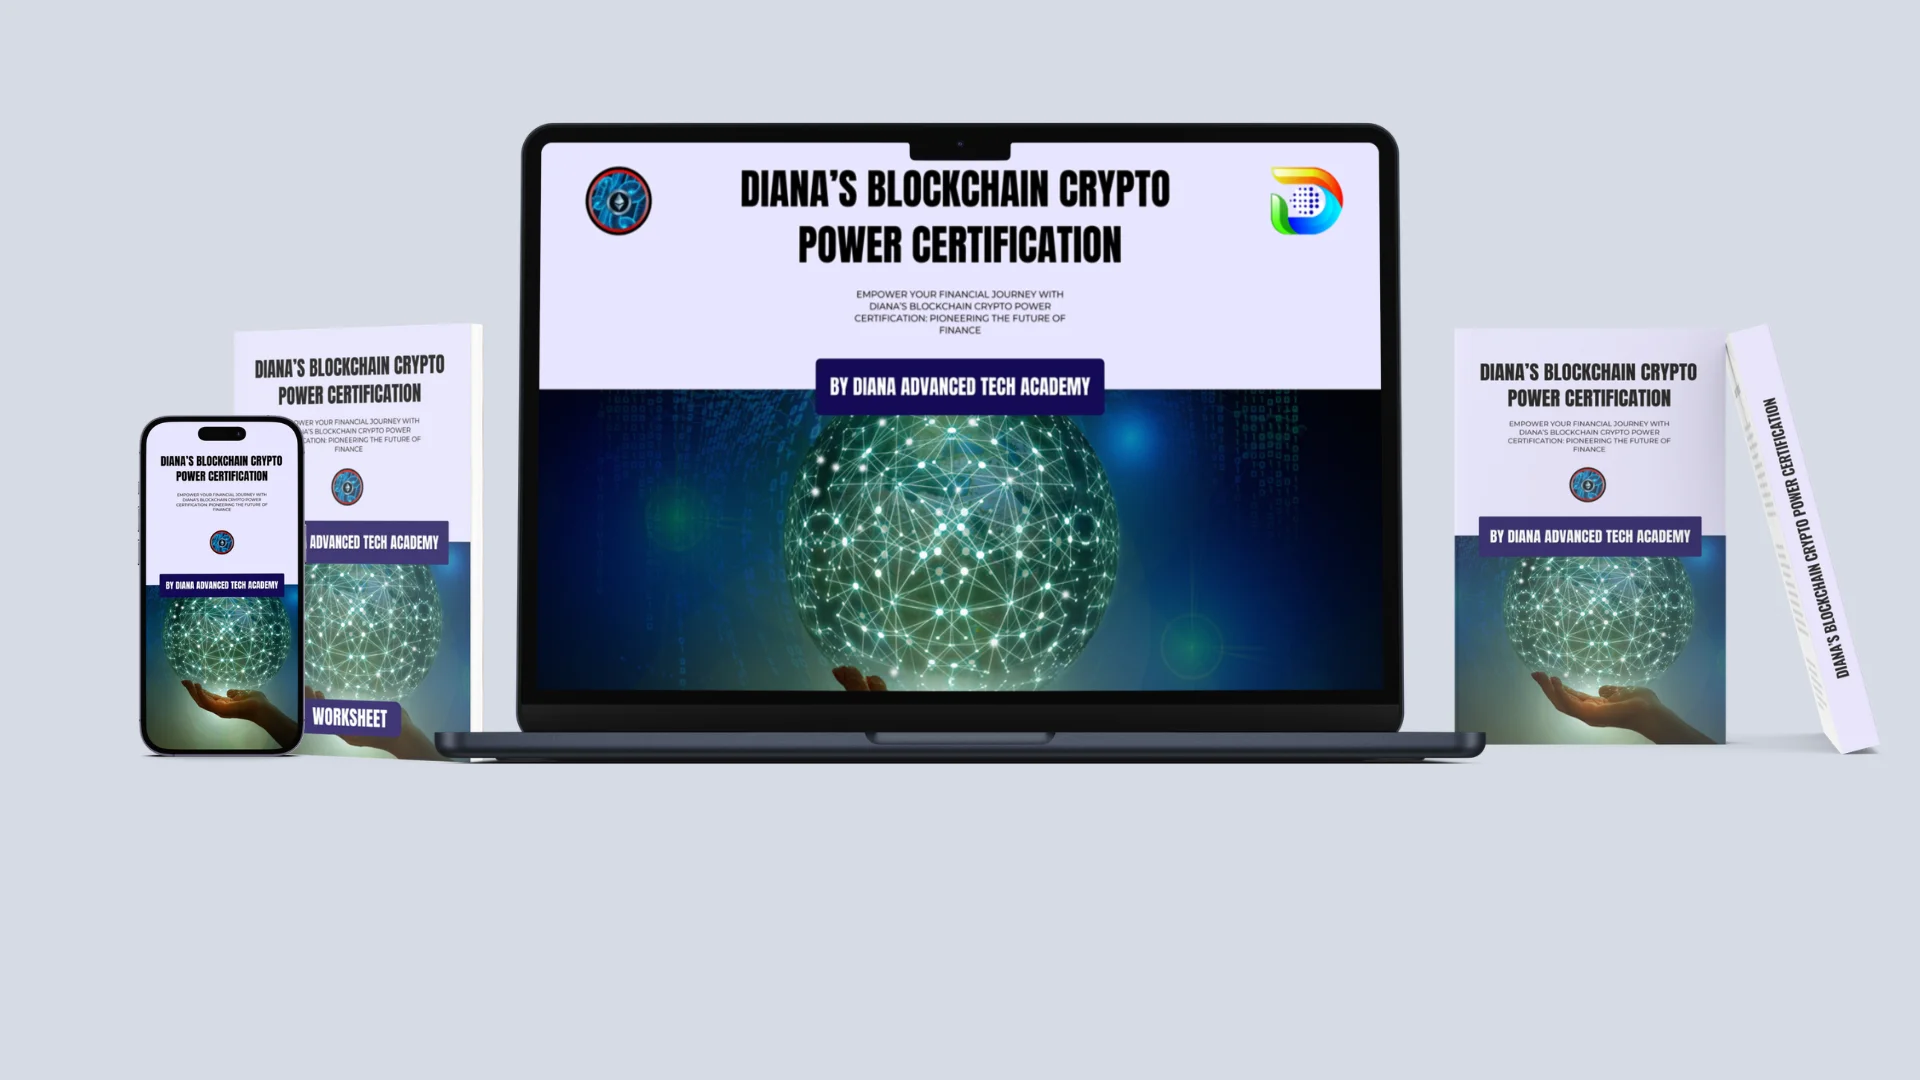 DIANA’S BLOCKCHAIN CRYPTO POWER CERTIFICATION (DBCP)